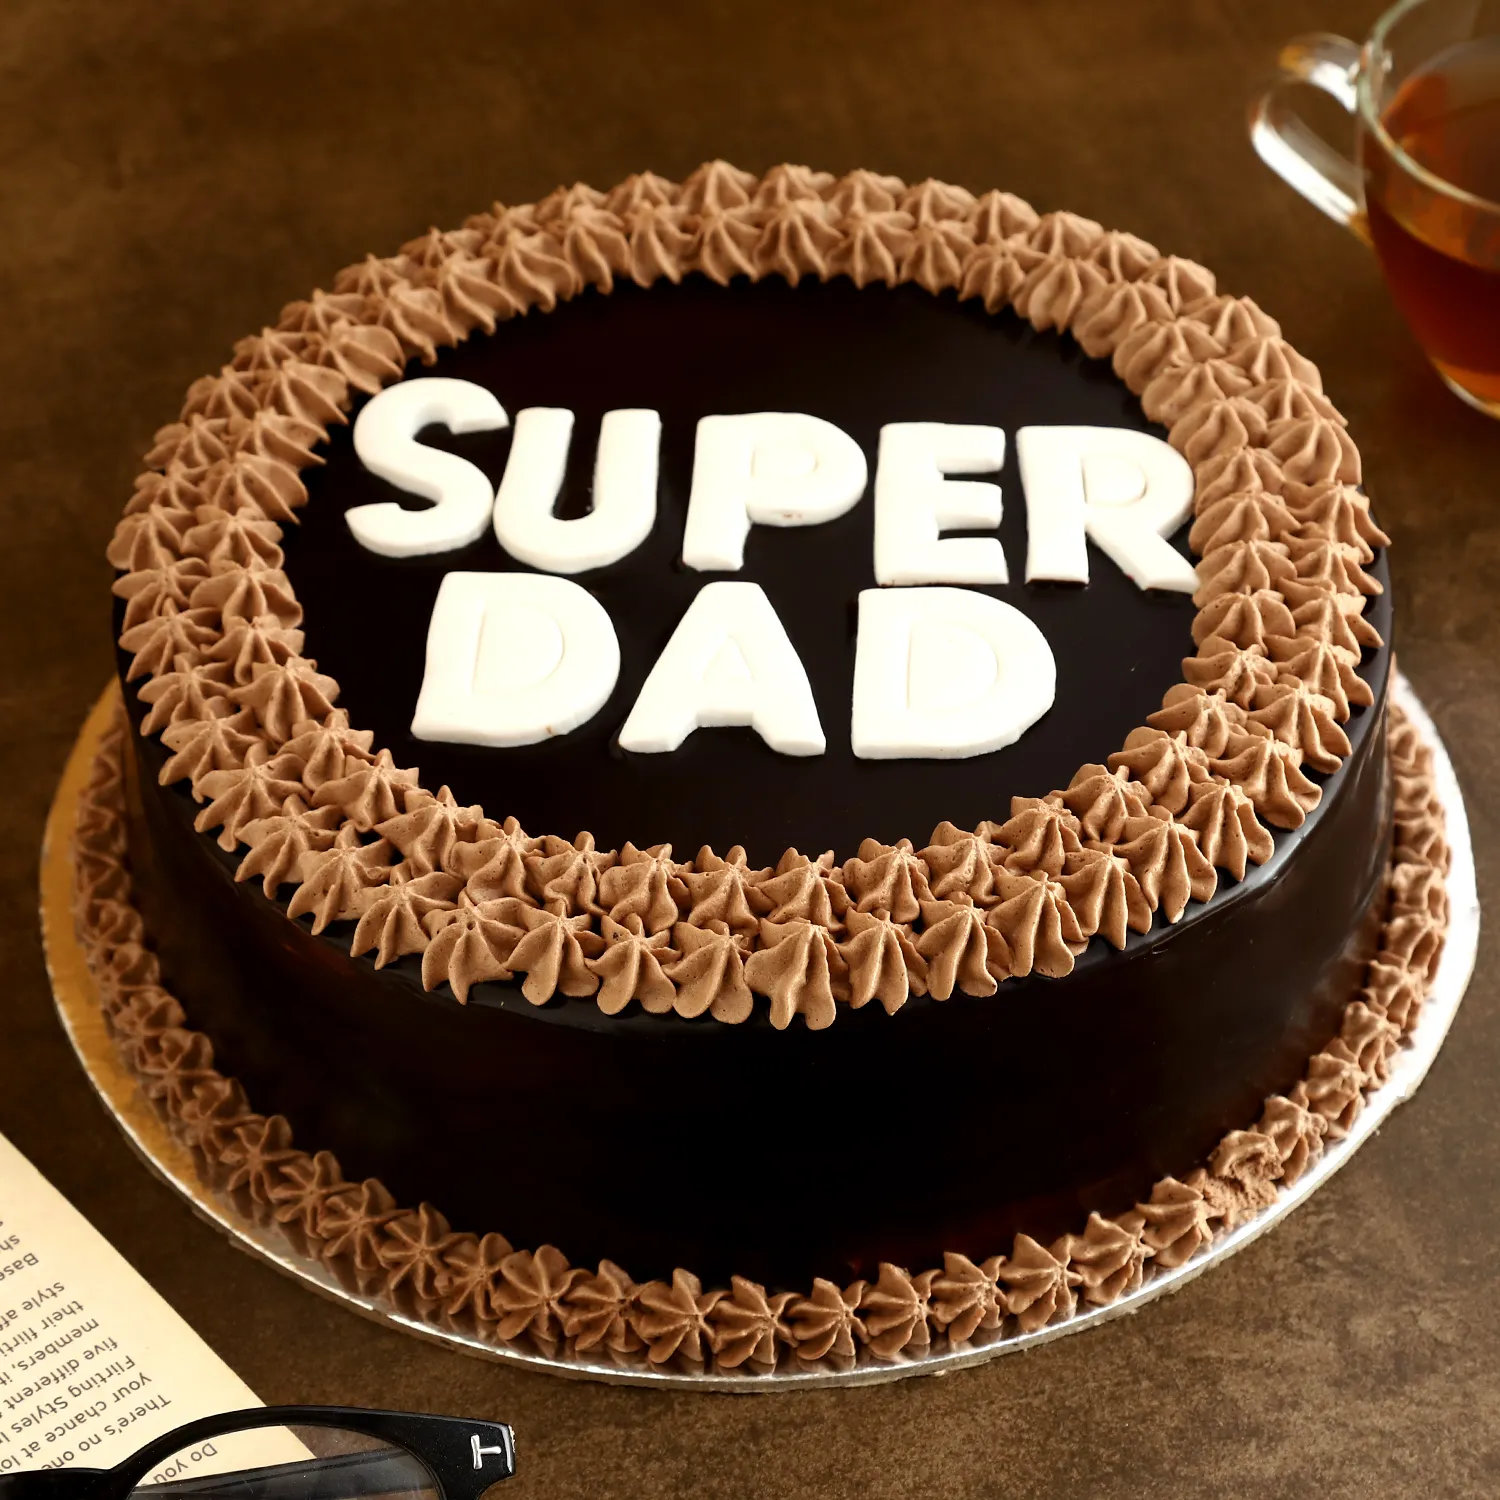 Super Dad Chocolate Cake - 1 KG